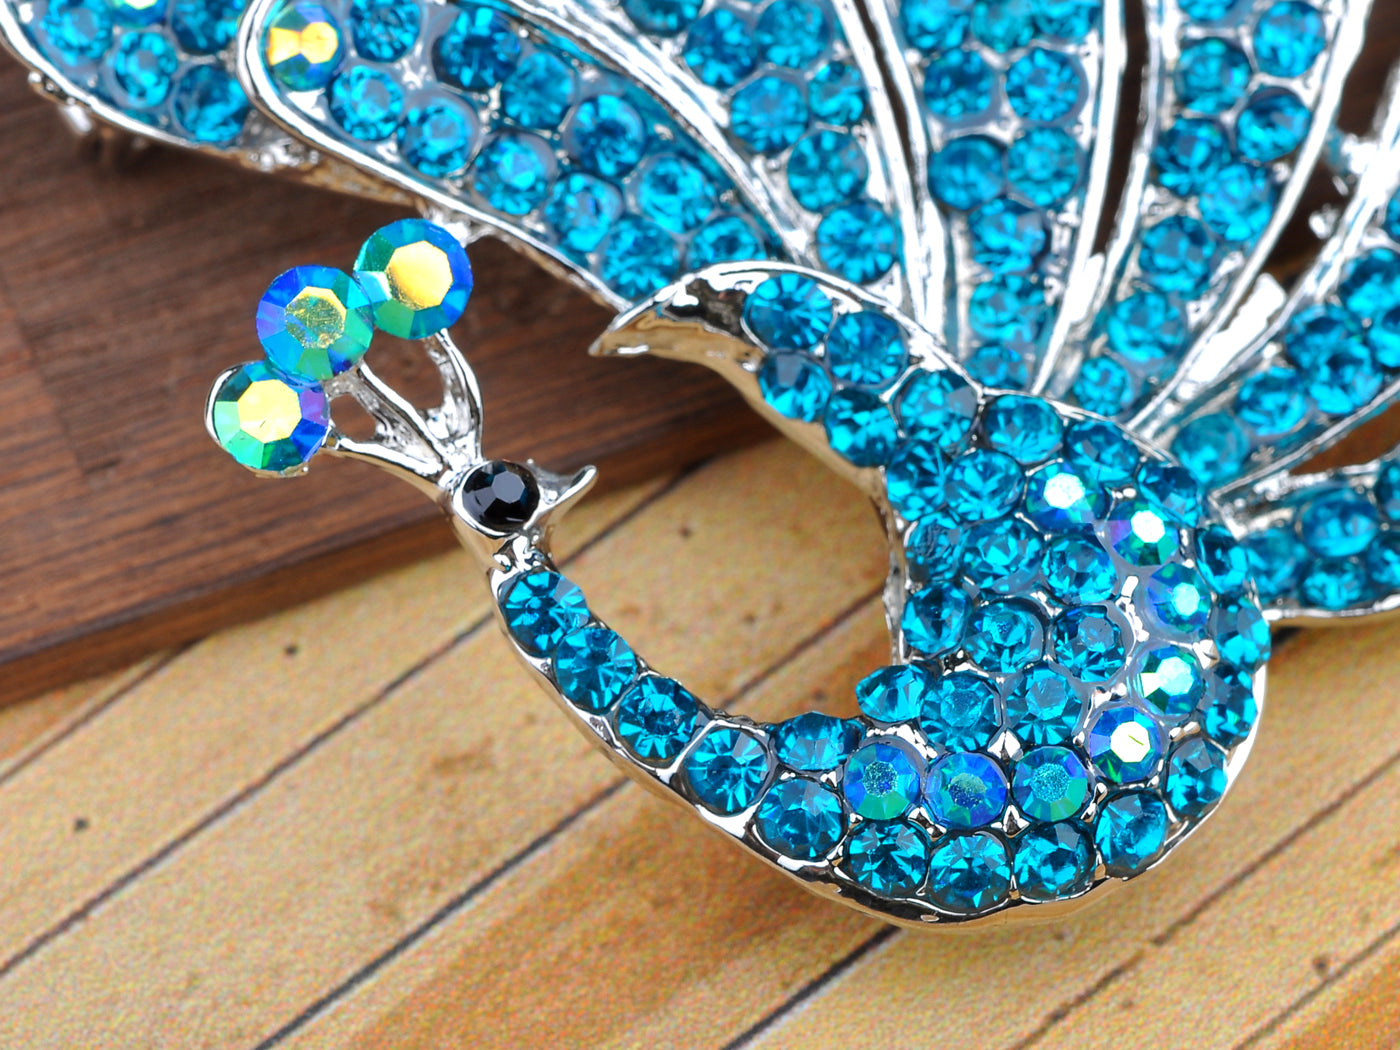 Beautiful Stunning Blue Feathered Peacock Bird Pin Brooch